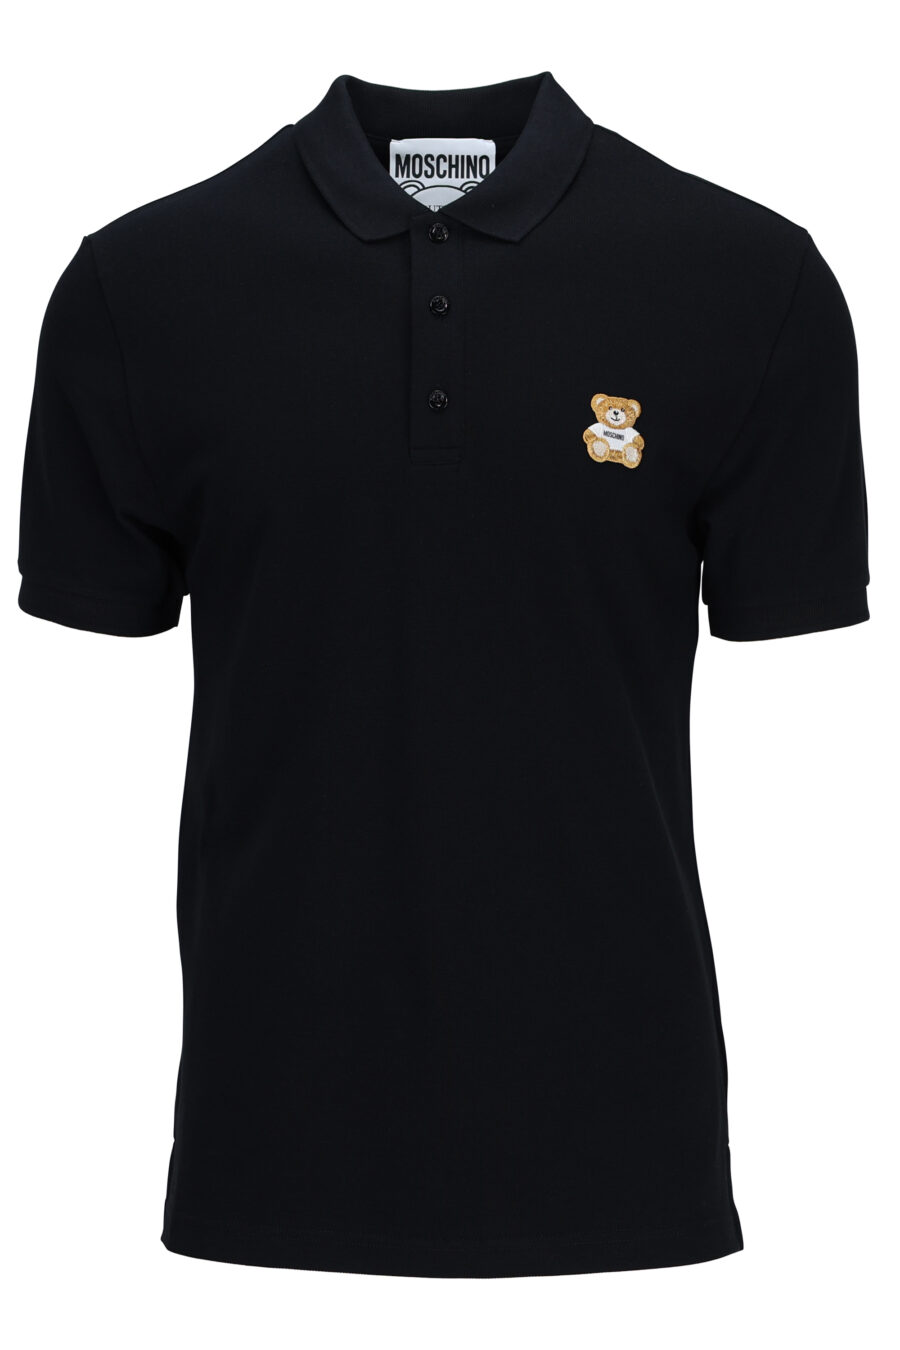 Black polo shirt with bear mini logo - 889316660906